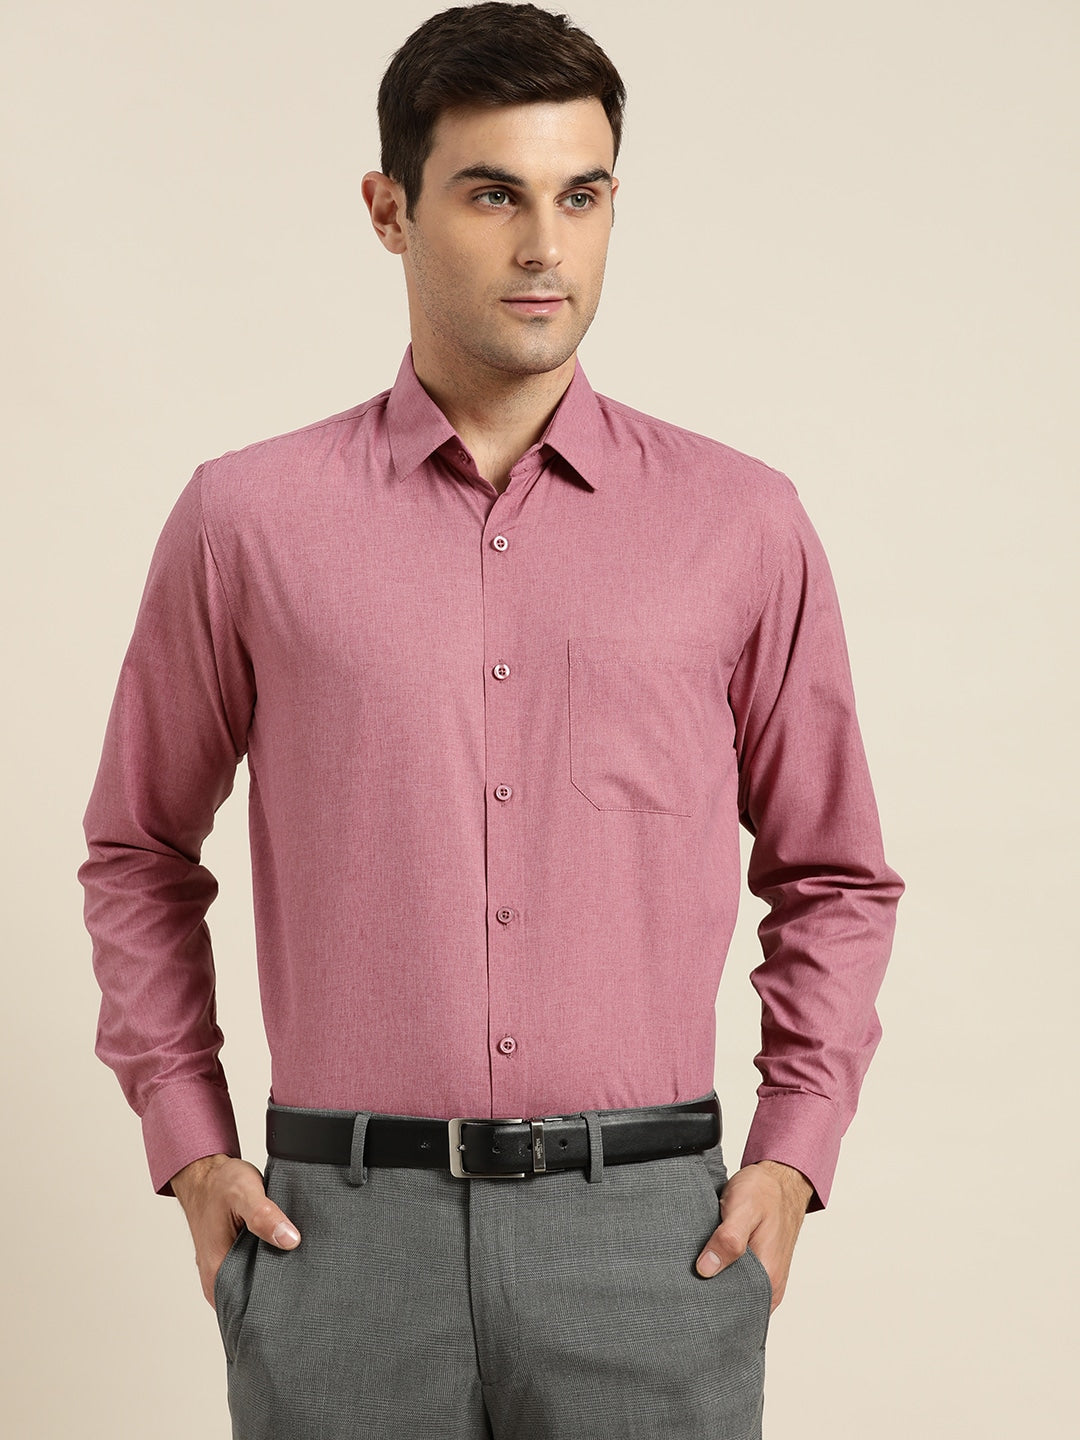 Men's Cotton Magenta Casual Shirt